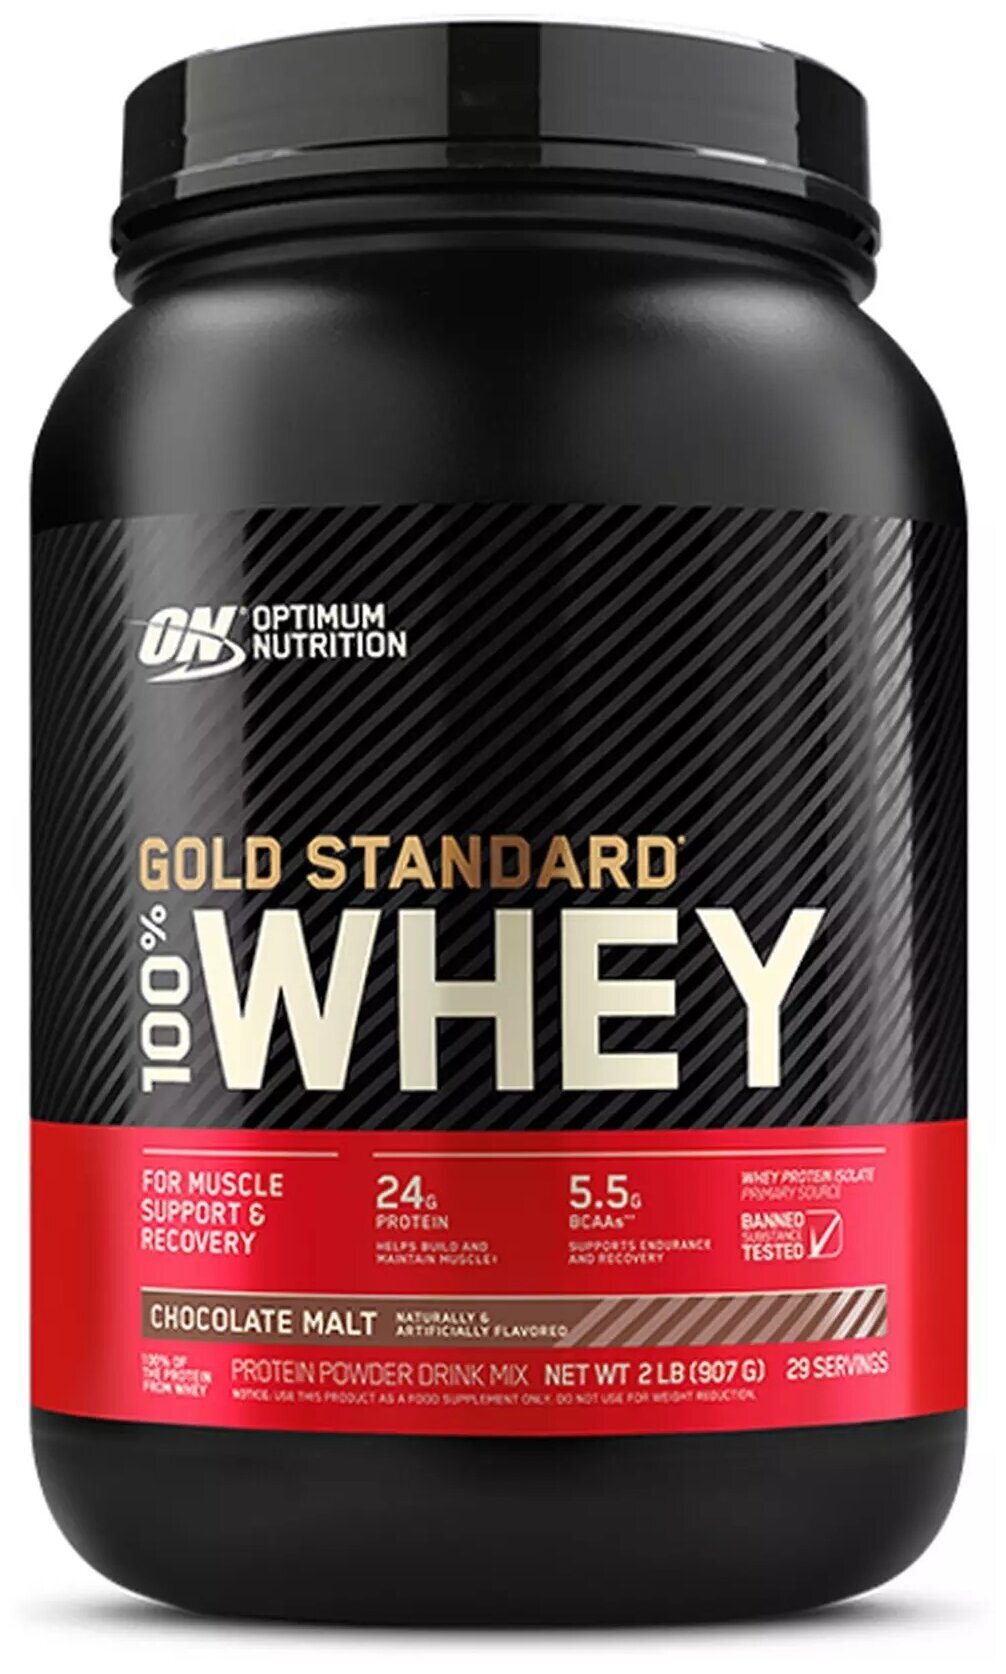 Протеин Optimum Nutrition 100% Whey Gold Standard 907 г шоколадный солод